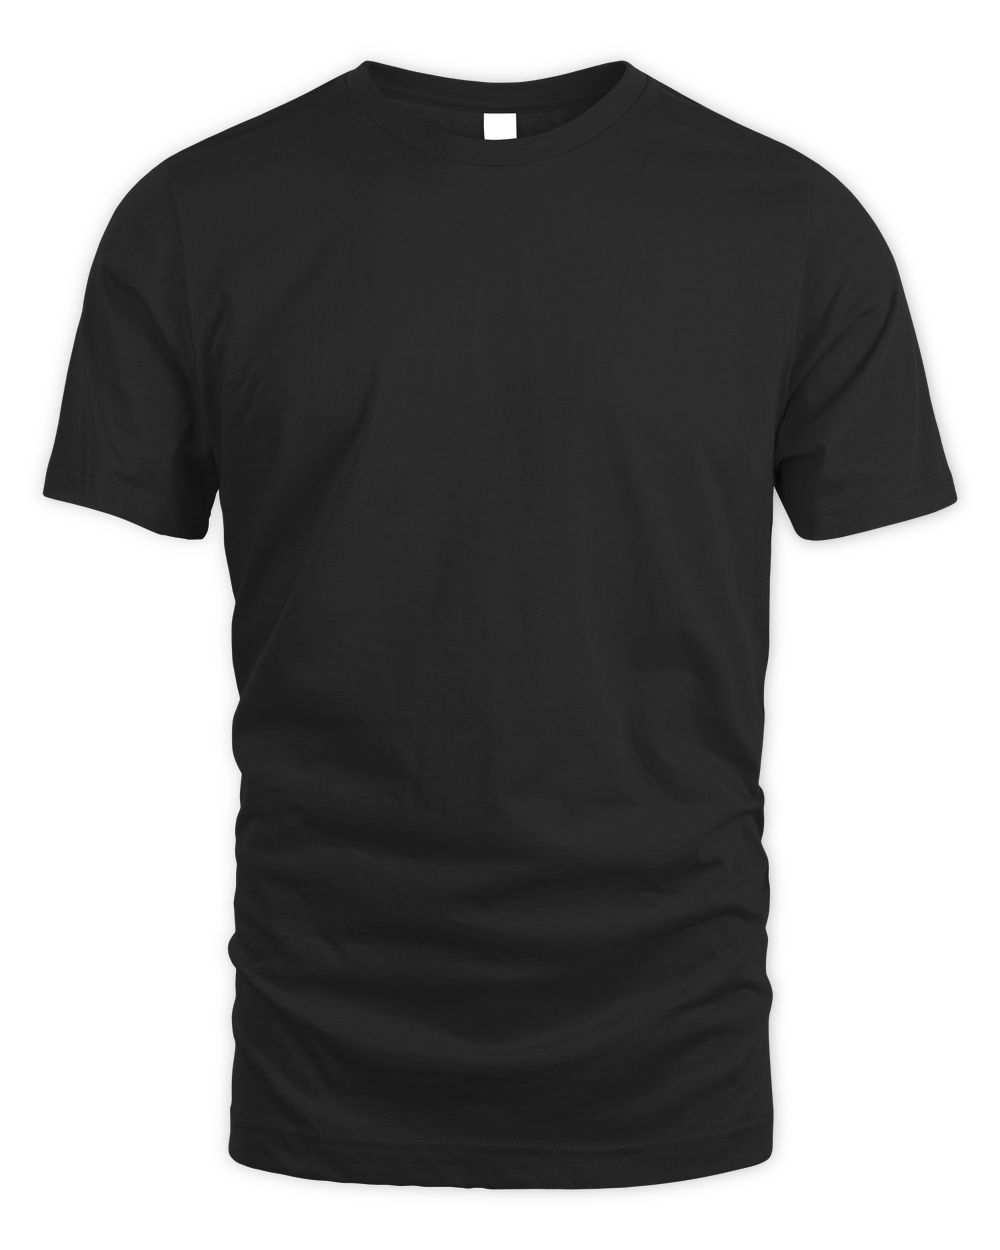 Quackity Merch Unisex Standard T-Shirt black 